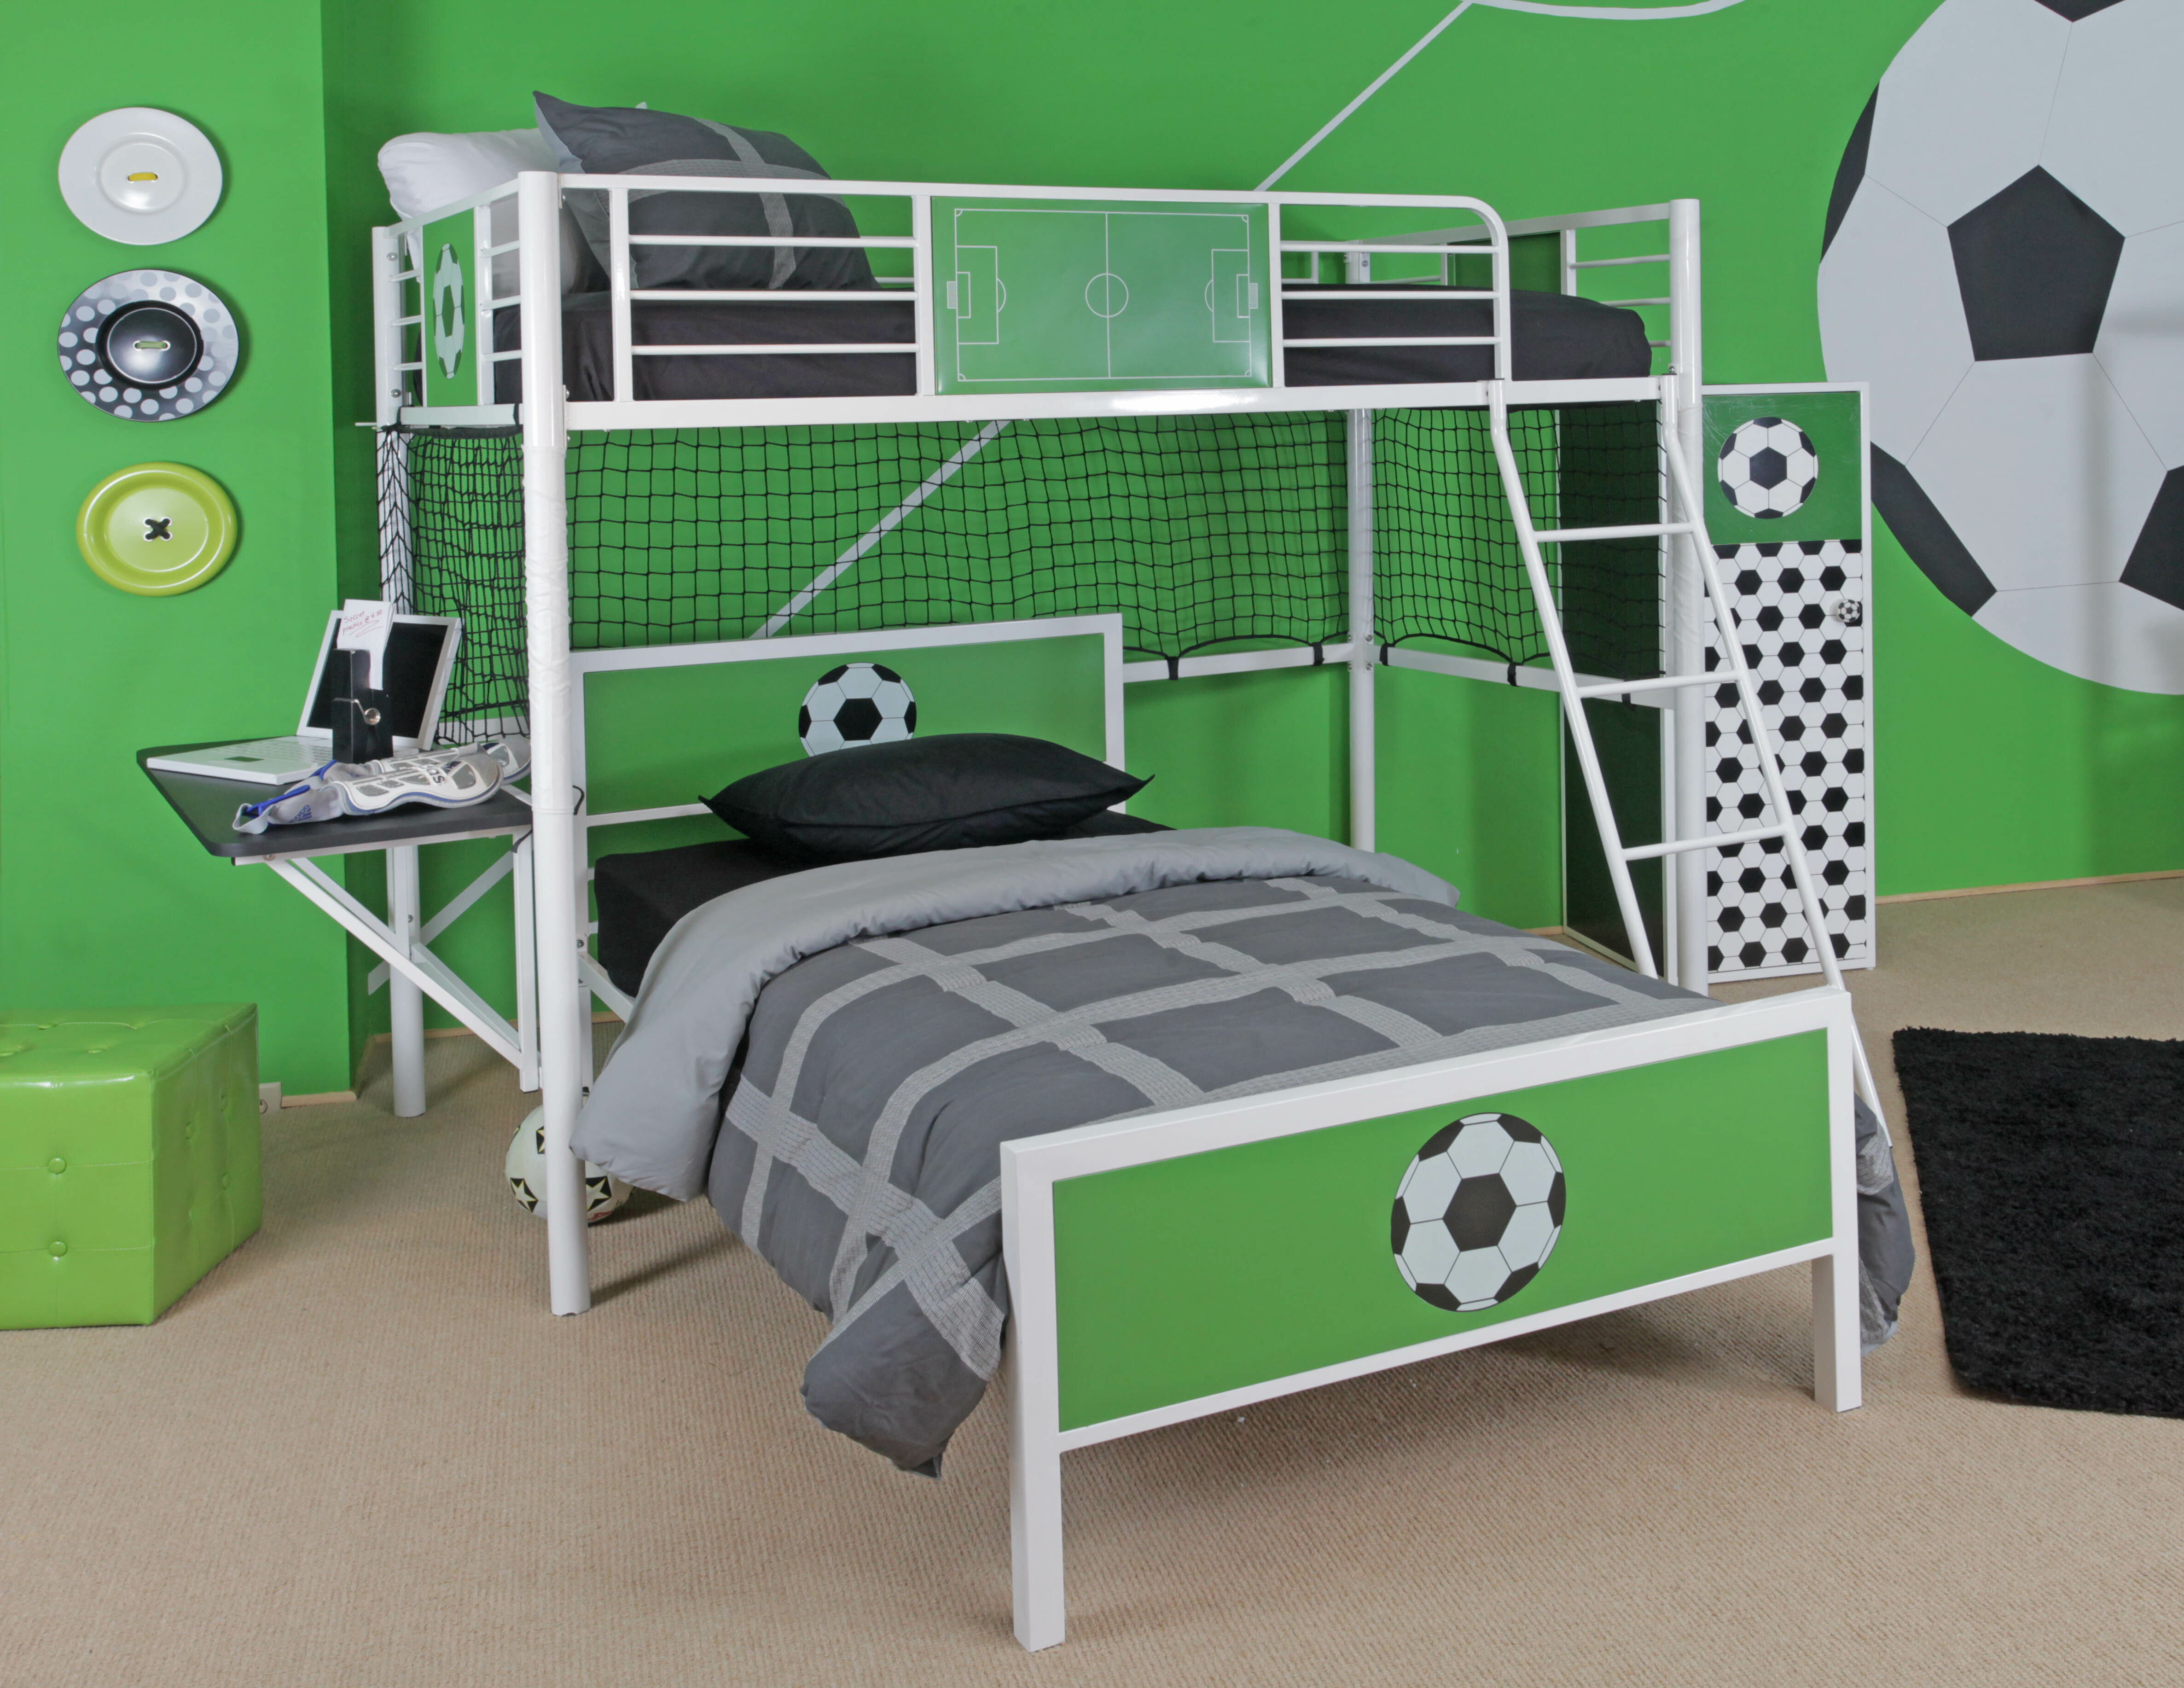 vidaXL Bunk Bed with Table Frame Bedroom Furniture Loft Study Work Bed Splits Children Kids Twin High Sleeper with Desk White Metal 3FT Single